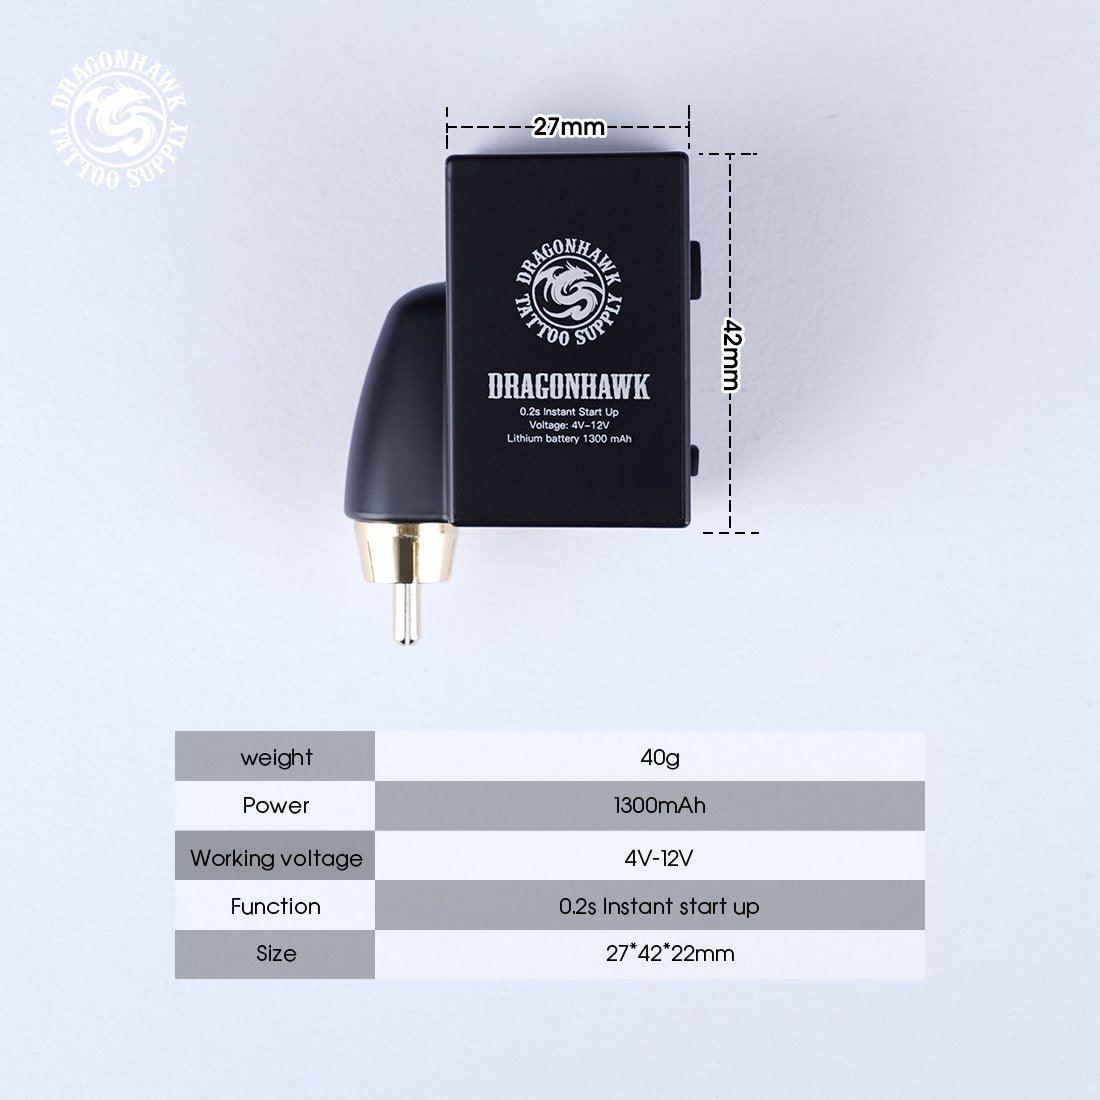 Dragonhawk Wireless Tattoo Battery Supply - RCA or DC - Tattoo Everything Supplies